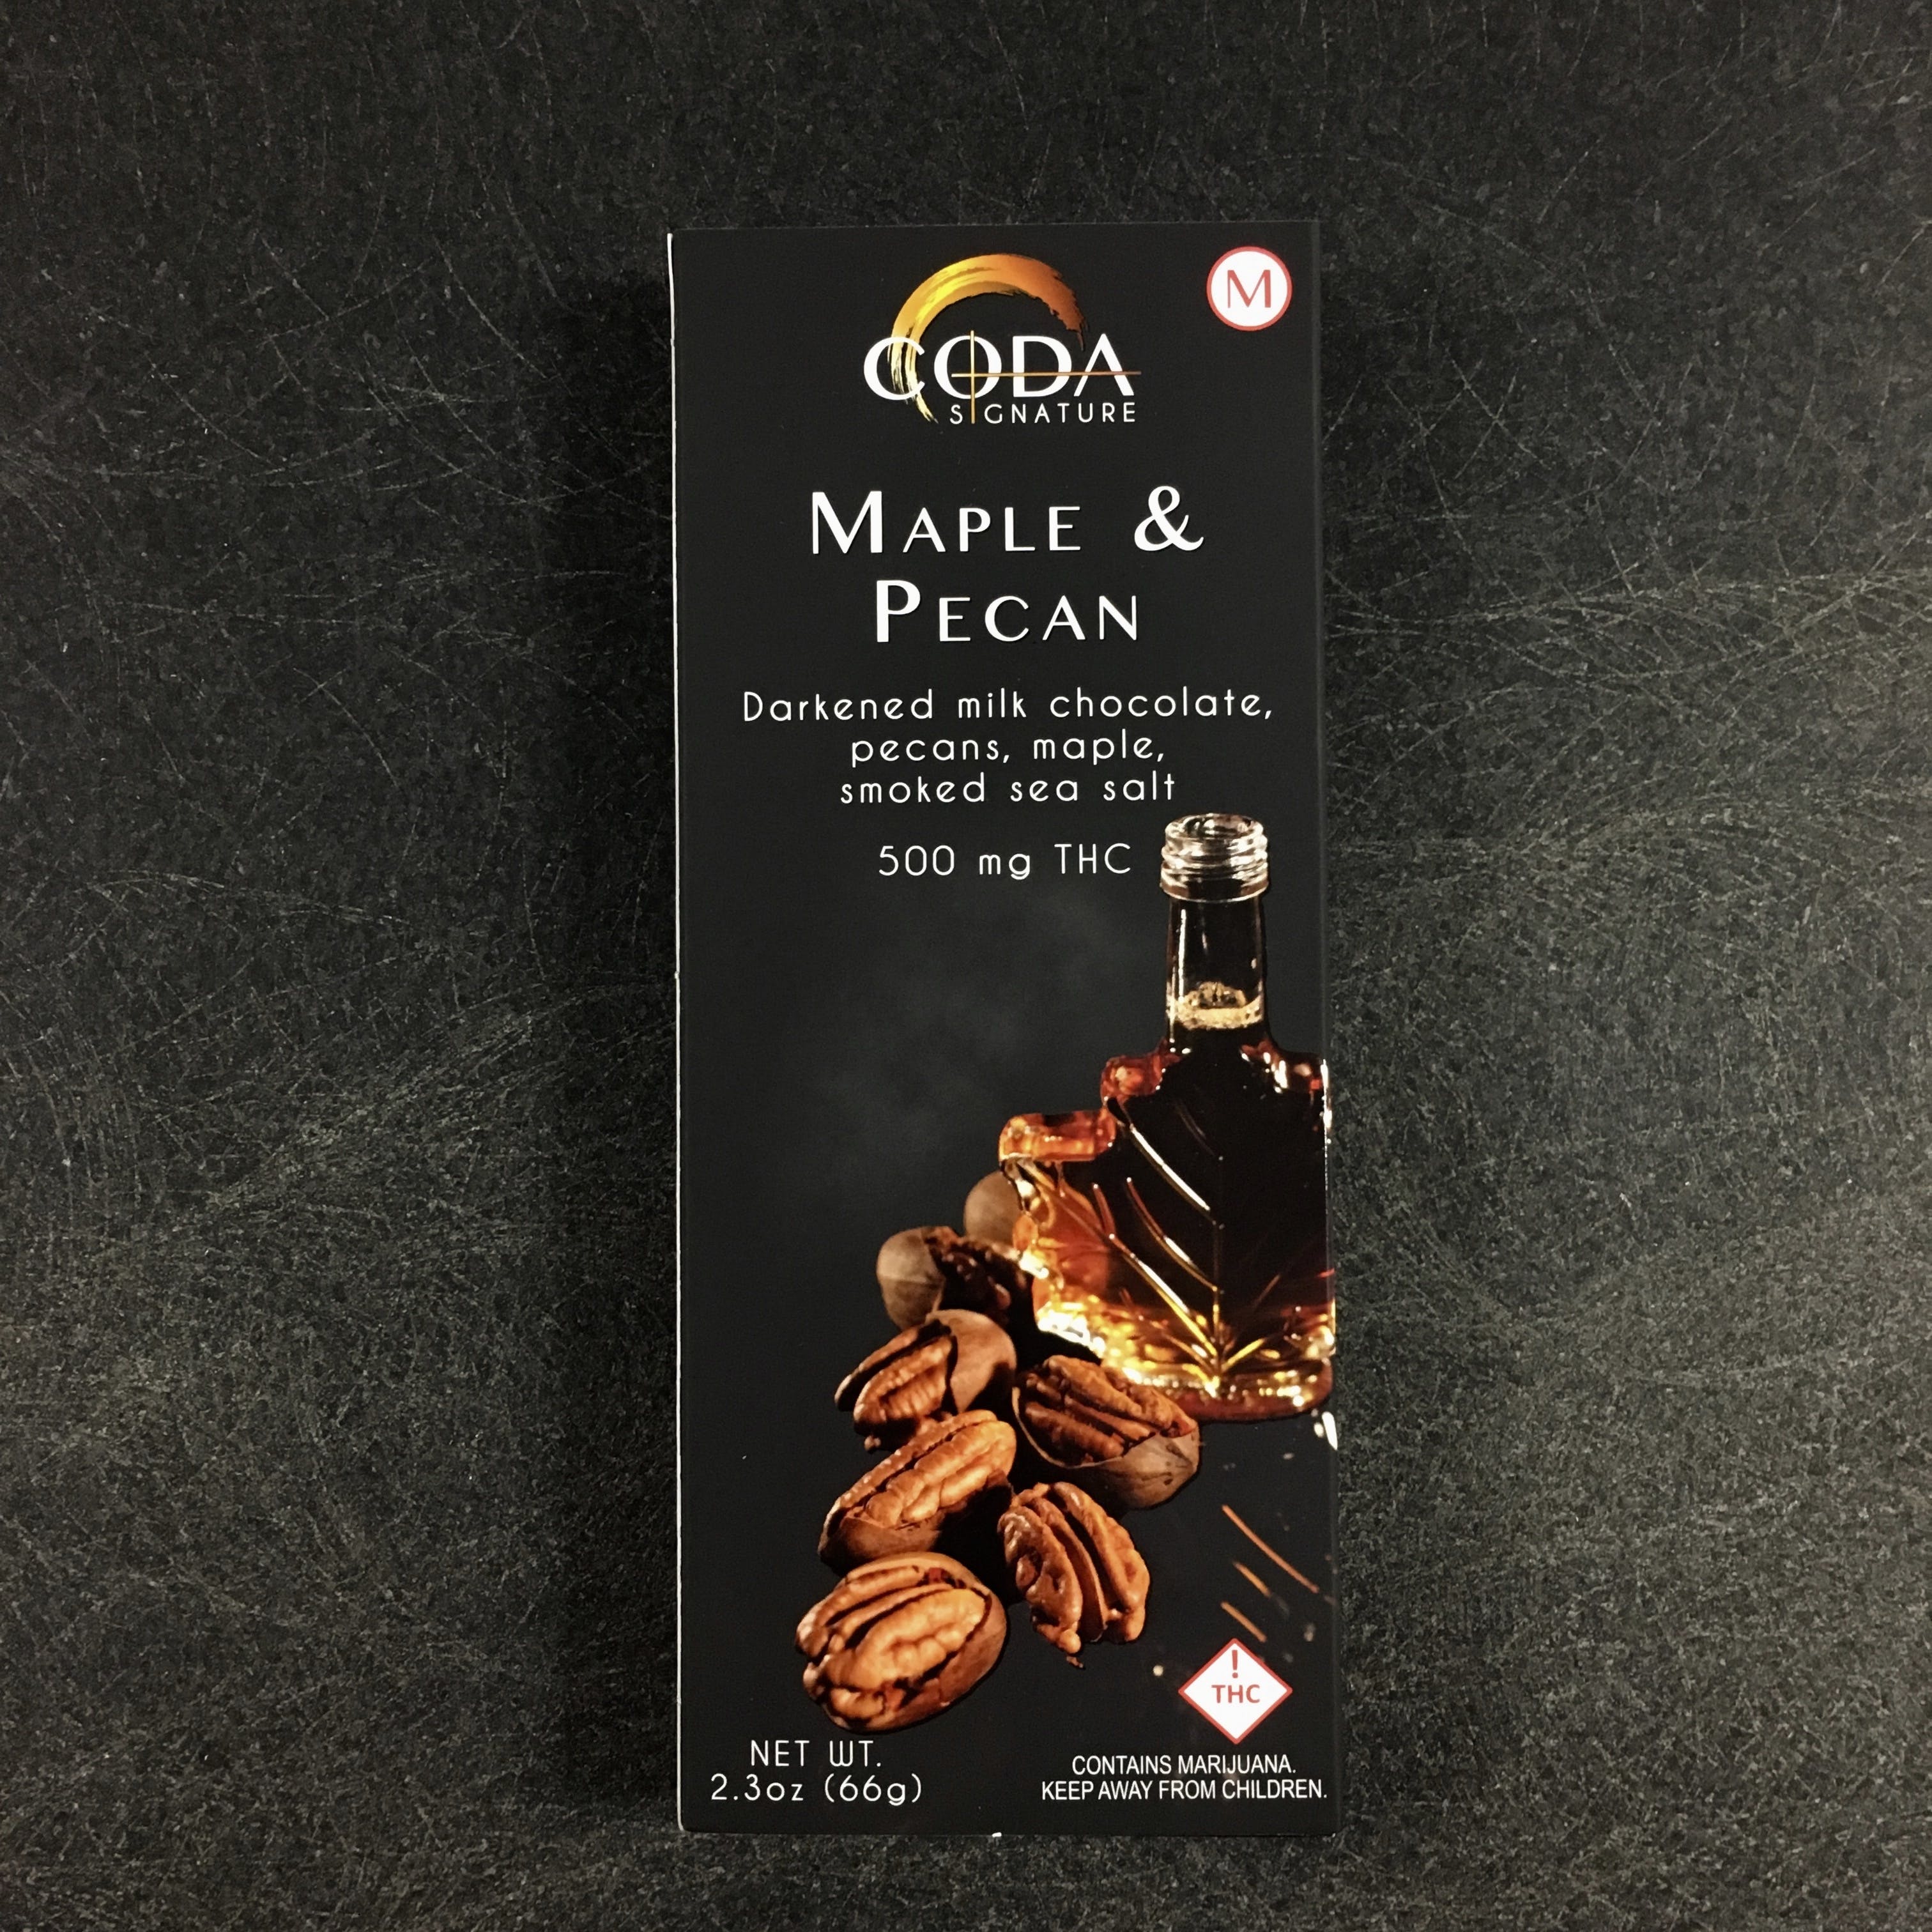 CODA Signature, Maple & Pecan Chocolate, 500mg